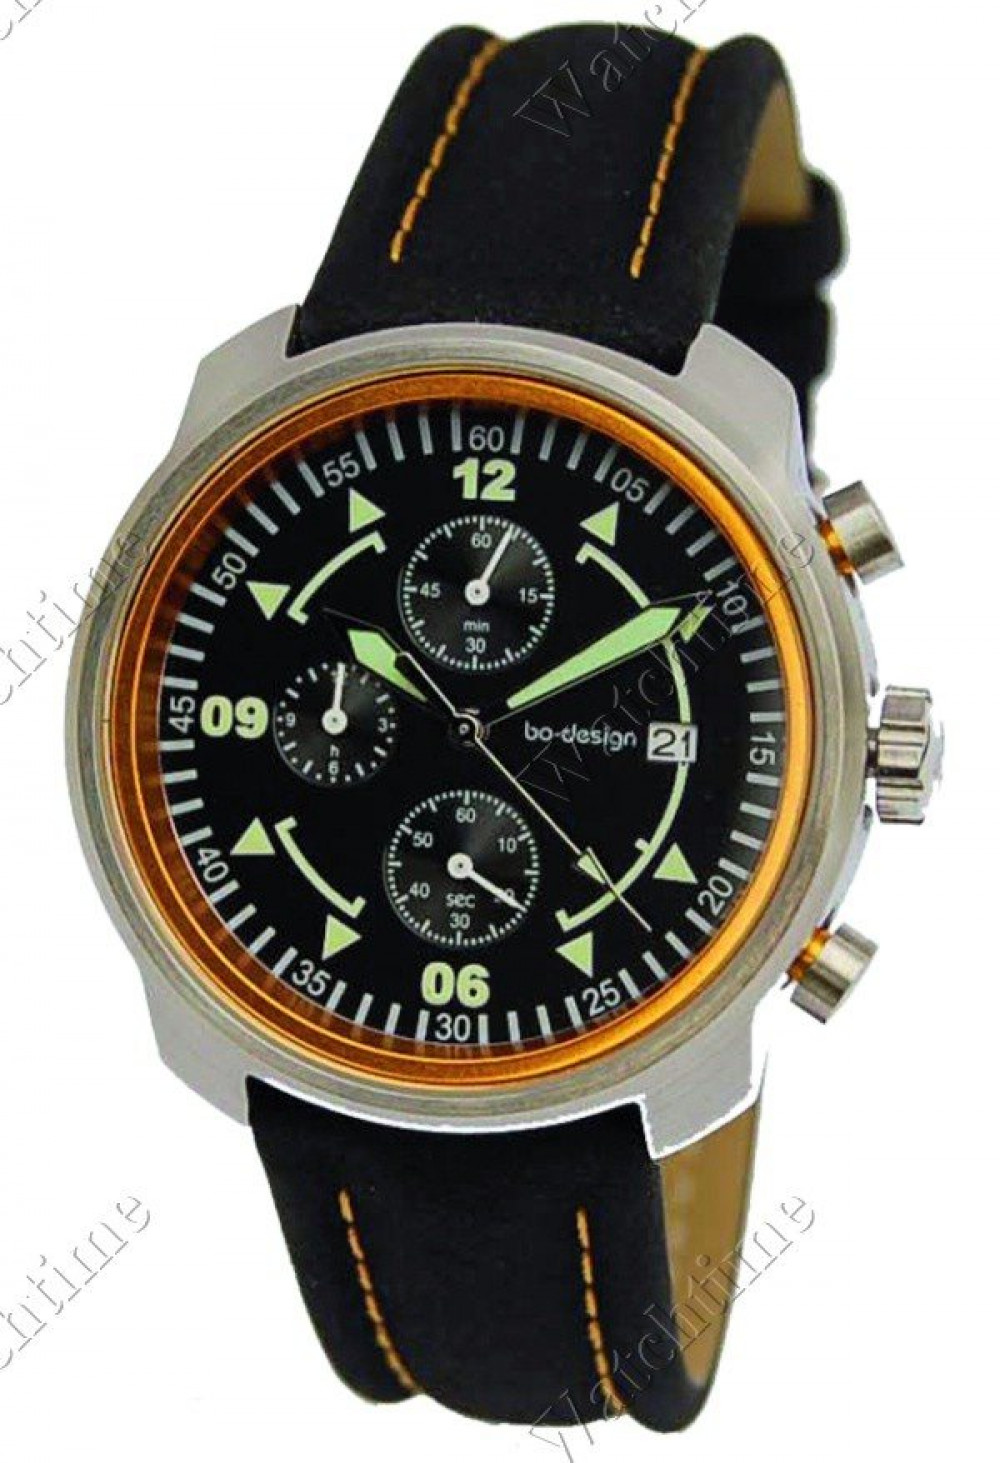 Zegarek firmy Bo-Design, model Mach 2,5